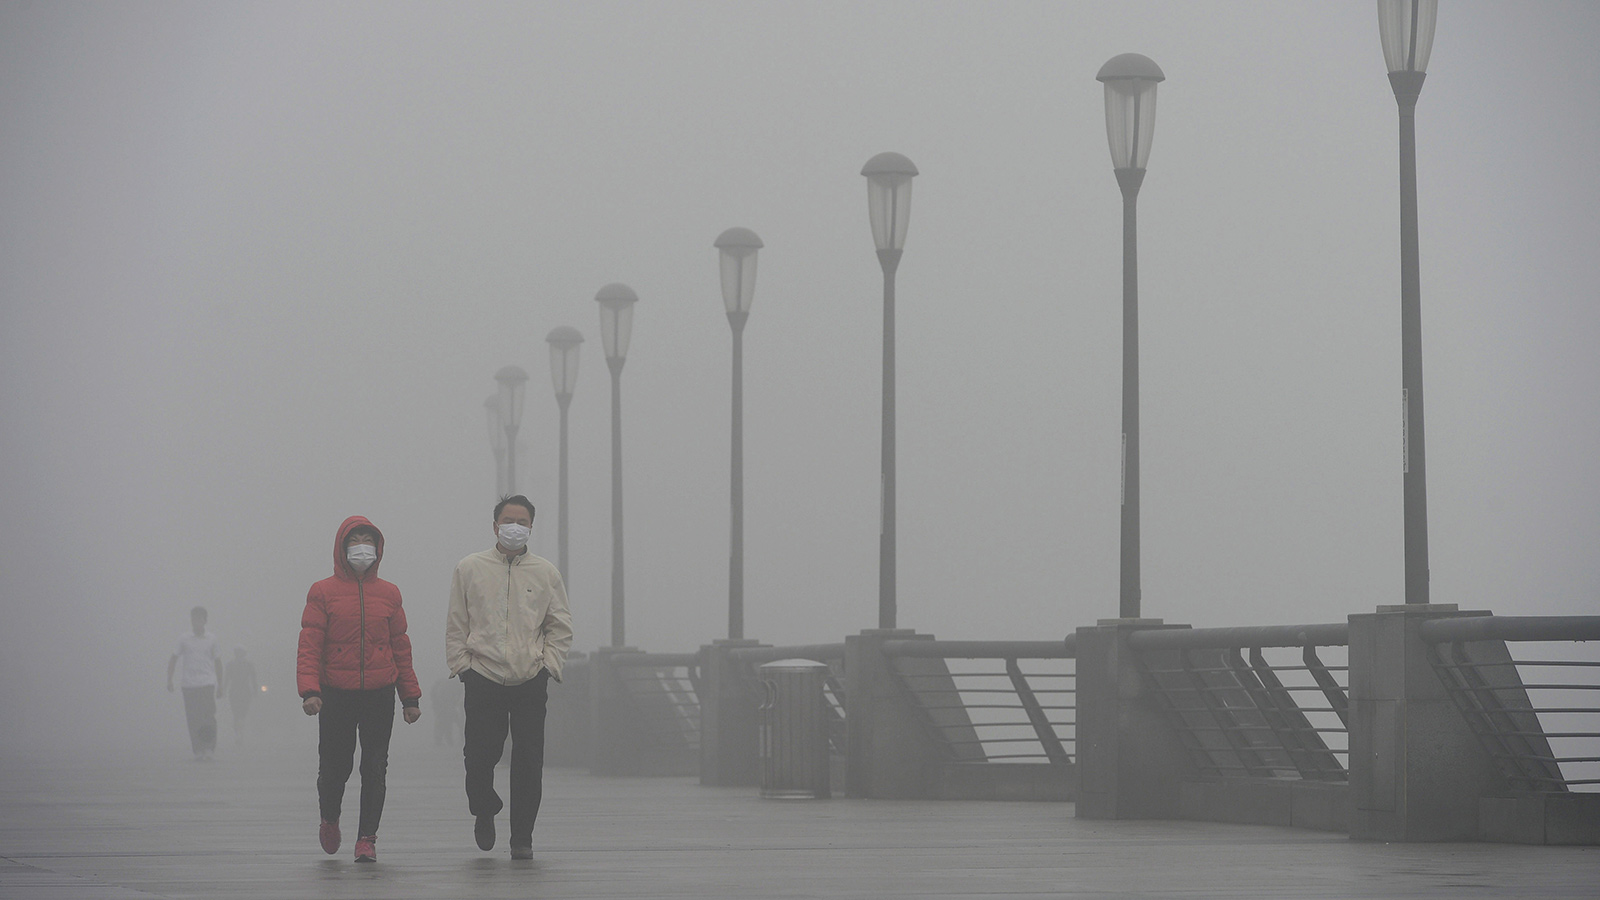 People wearing masks walk along The Bund on December 8, 2013 in Shanghai, China.